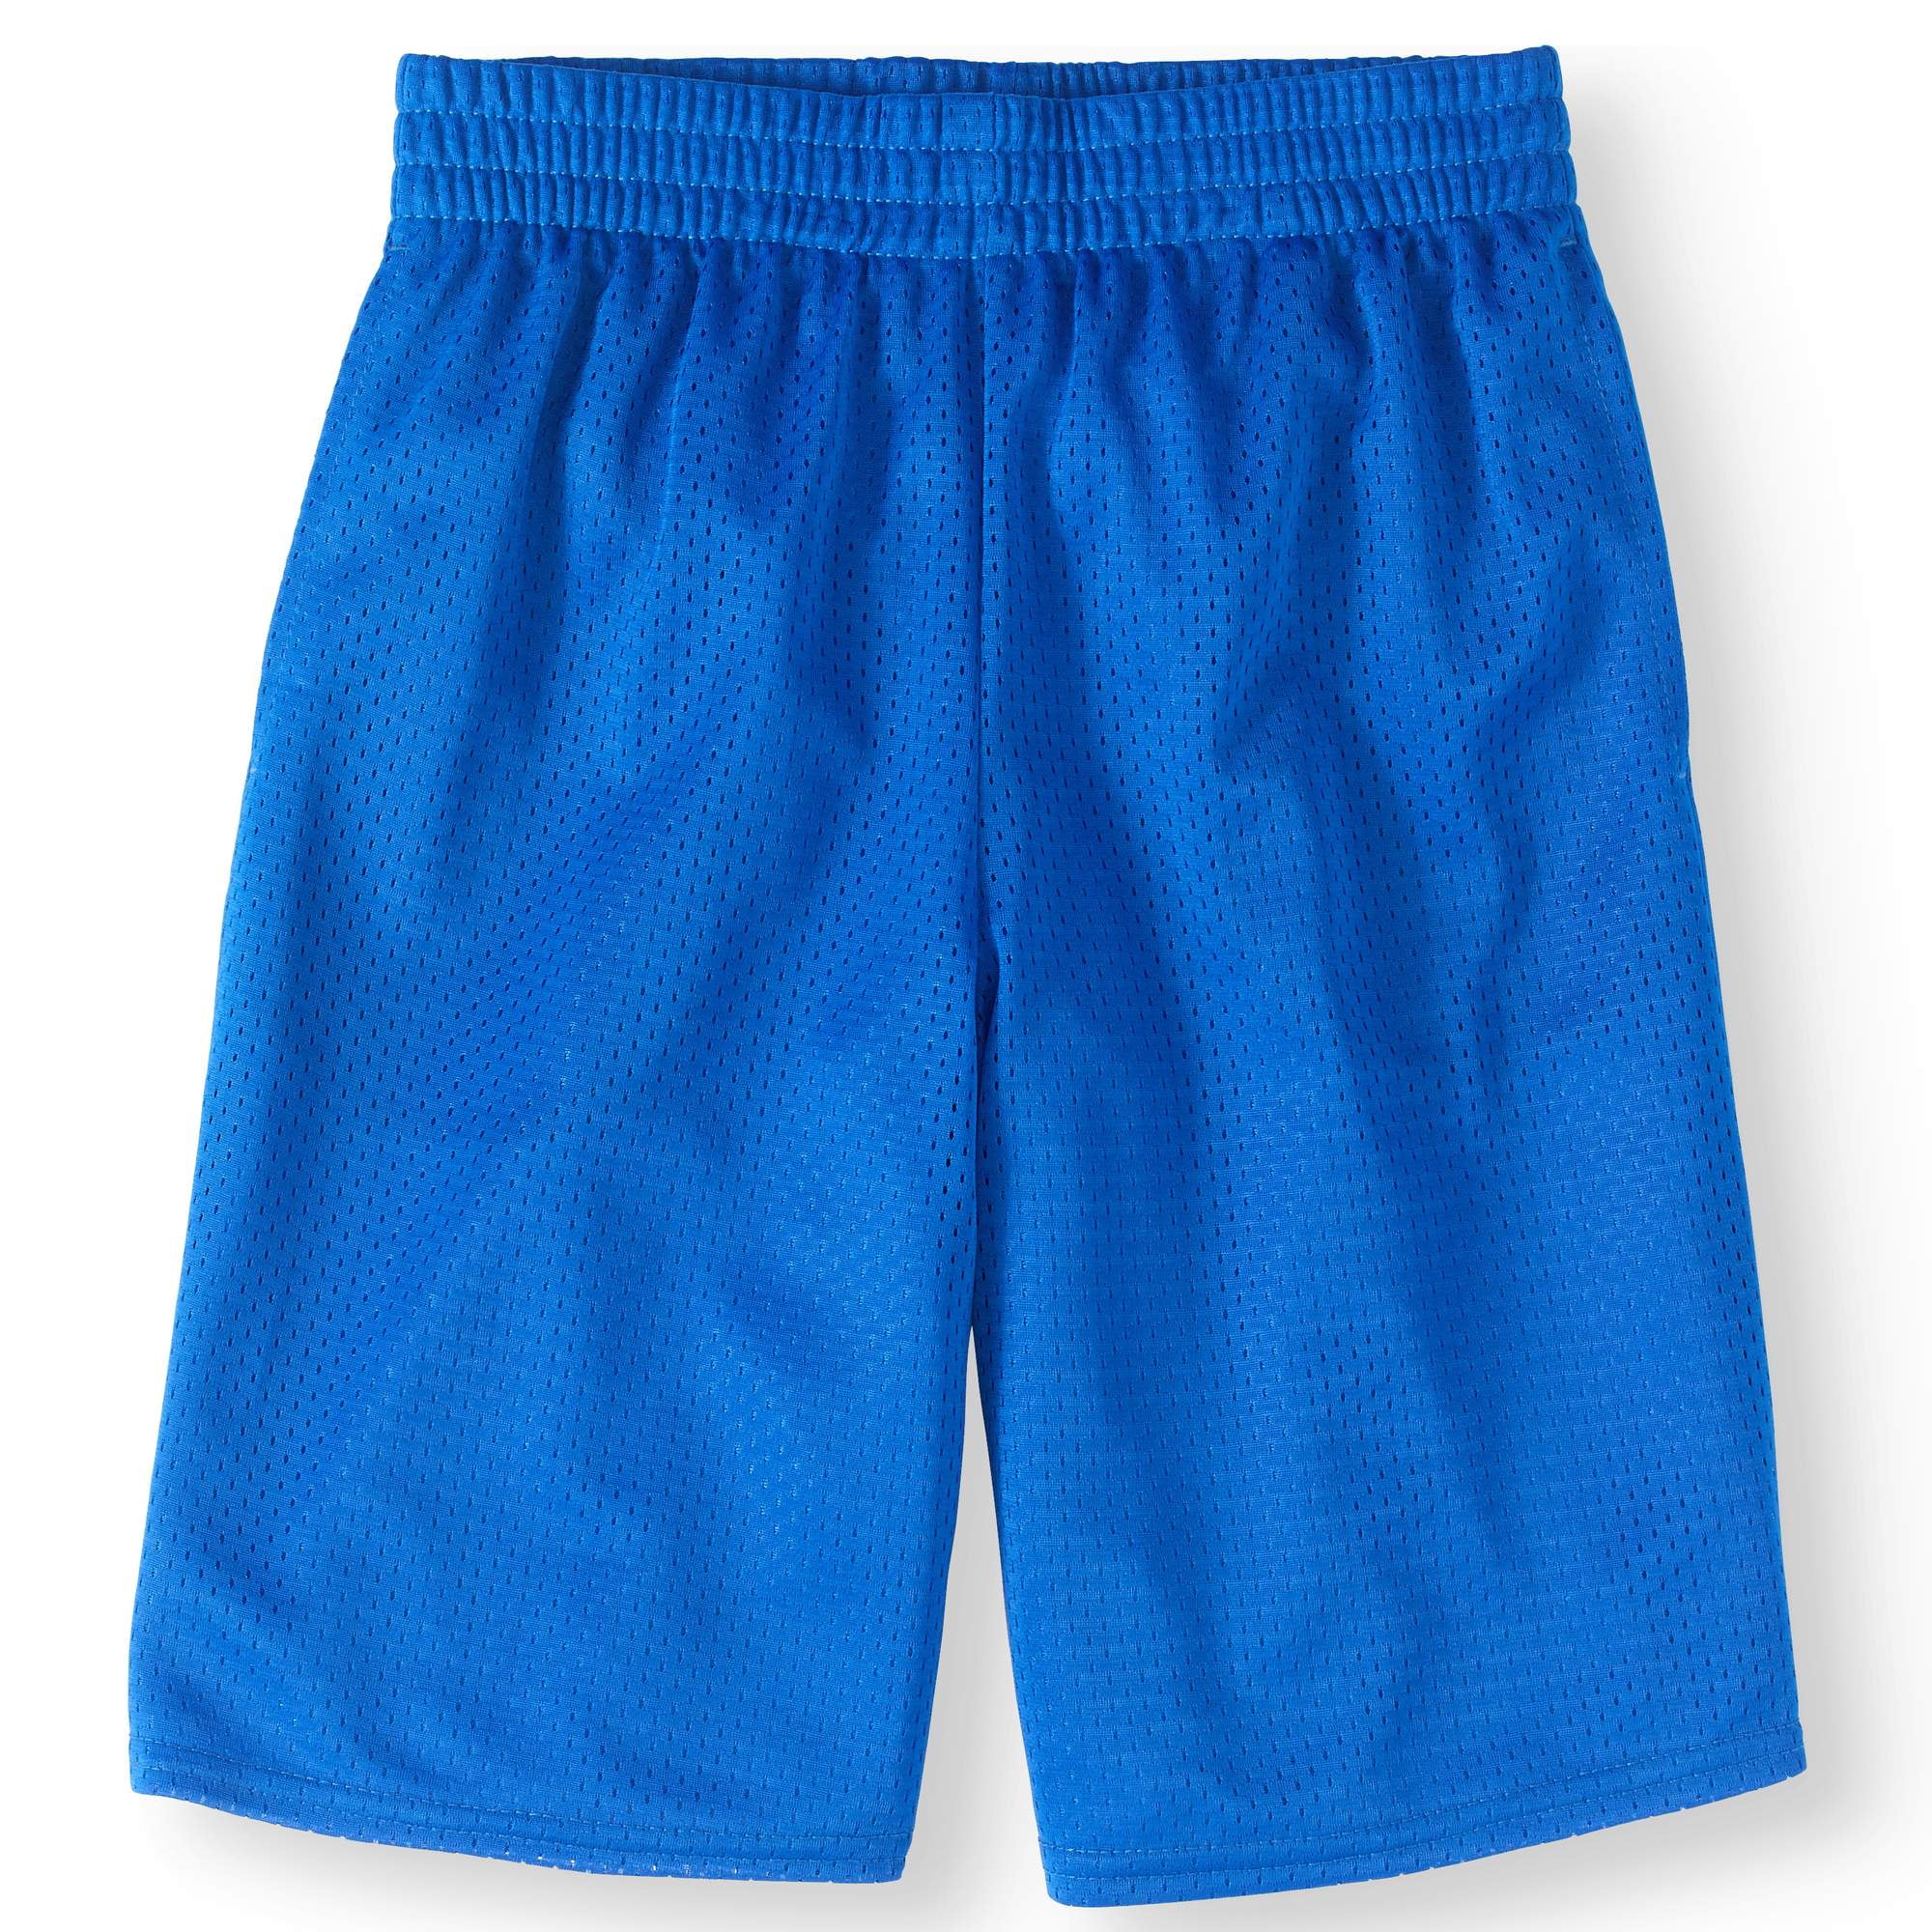 mesh shorts for boys